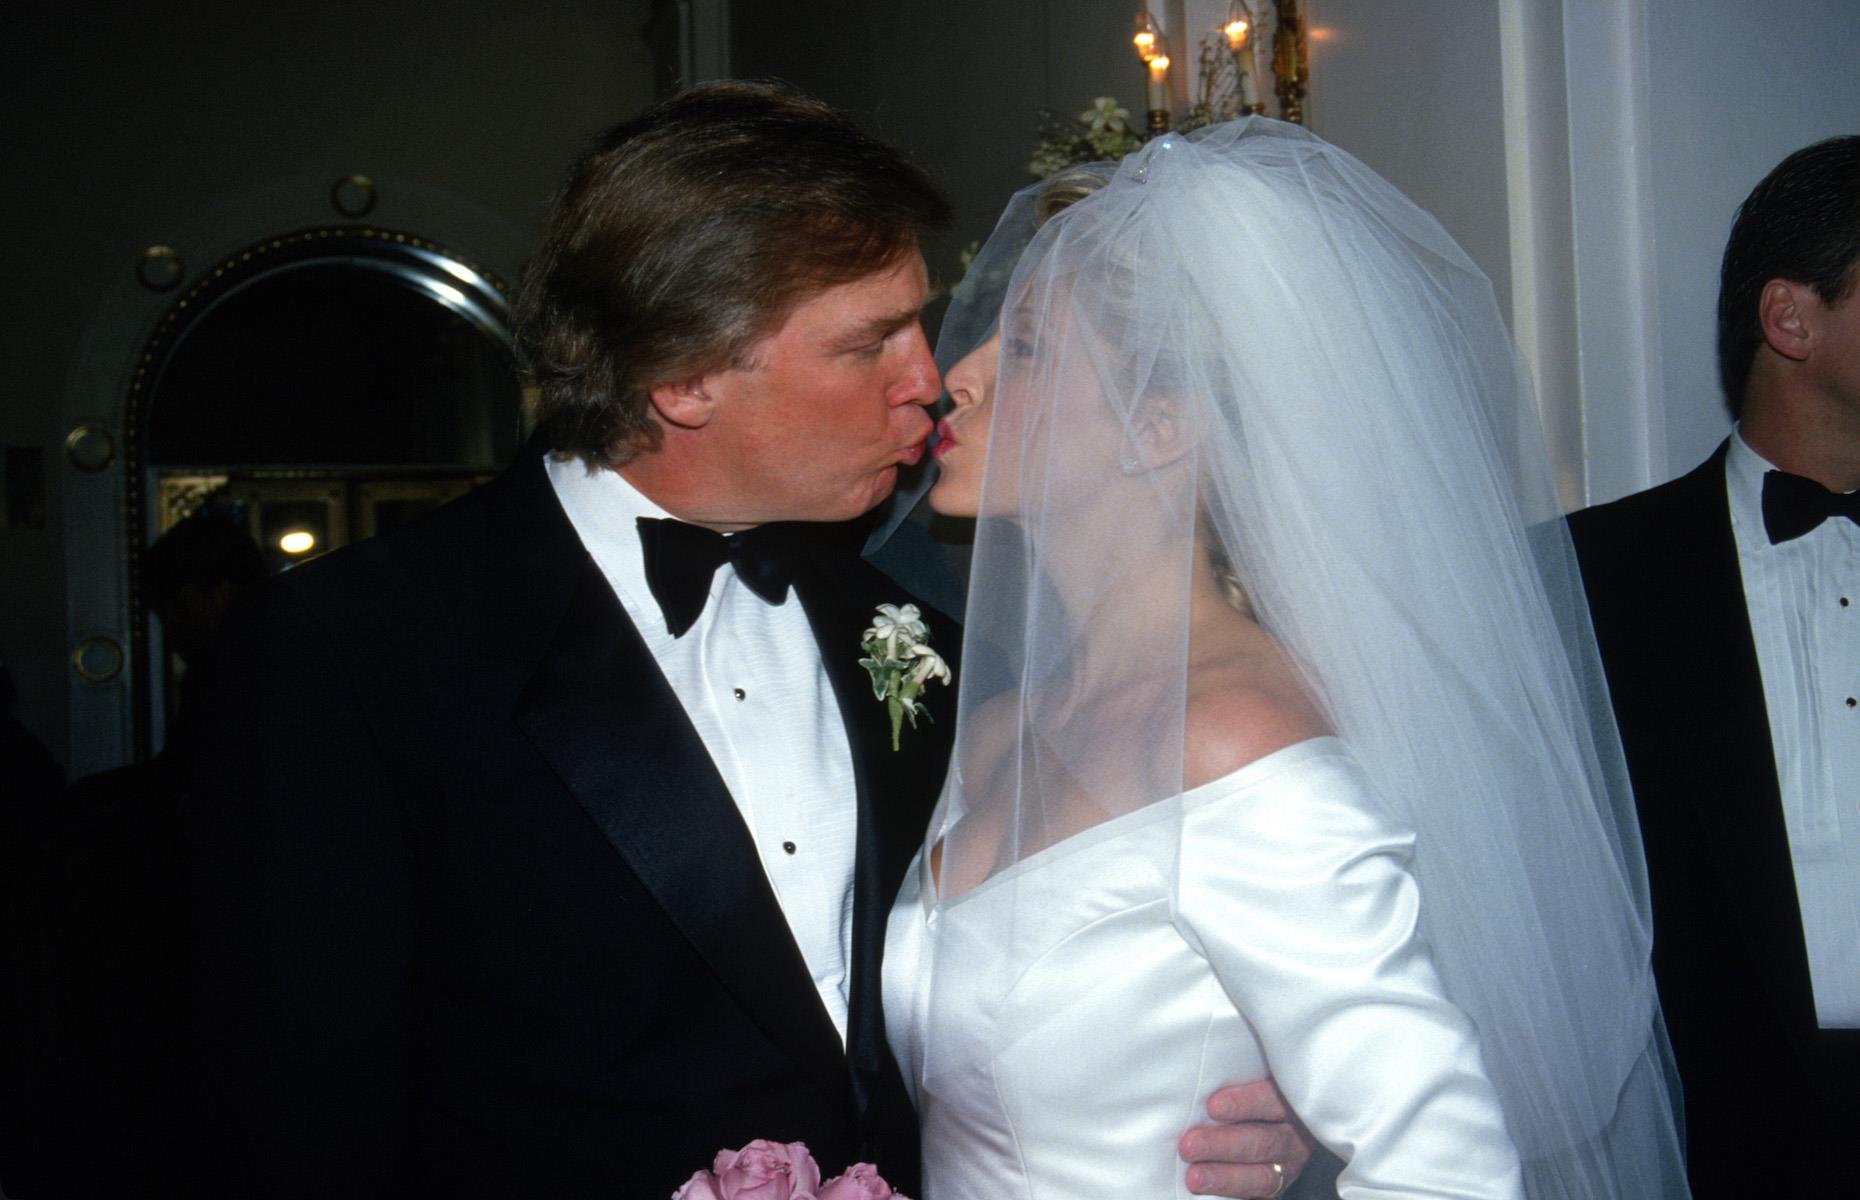 Marla marries Donald Trump